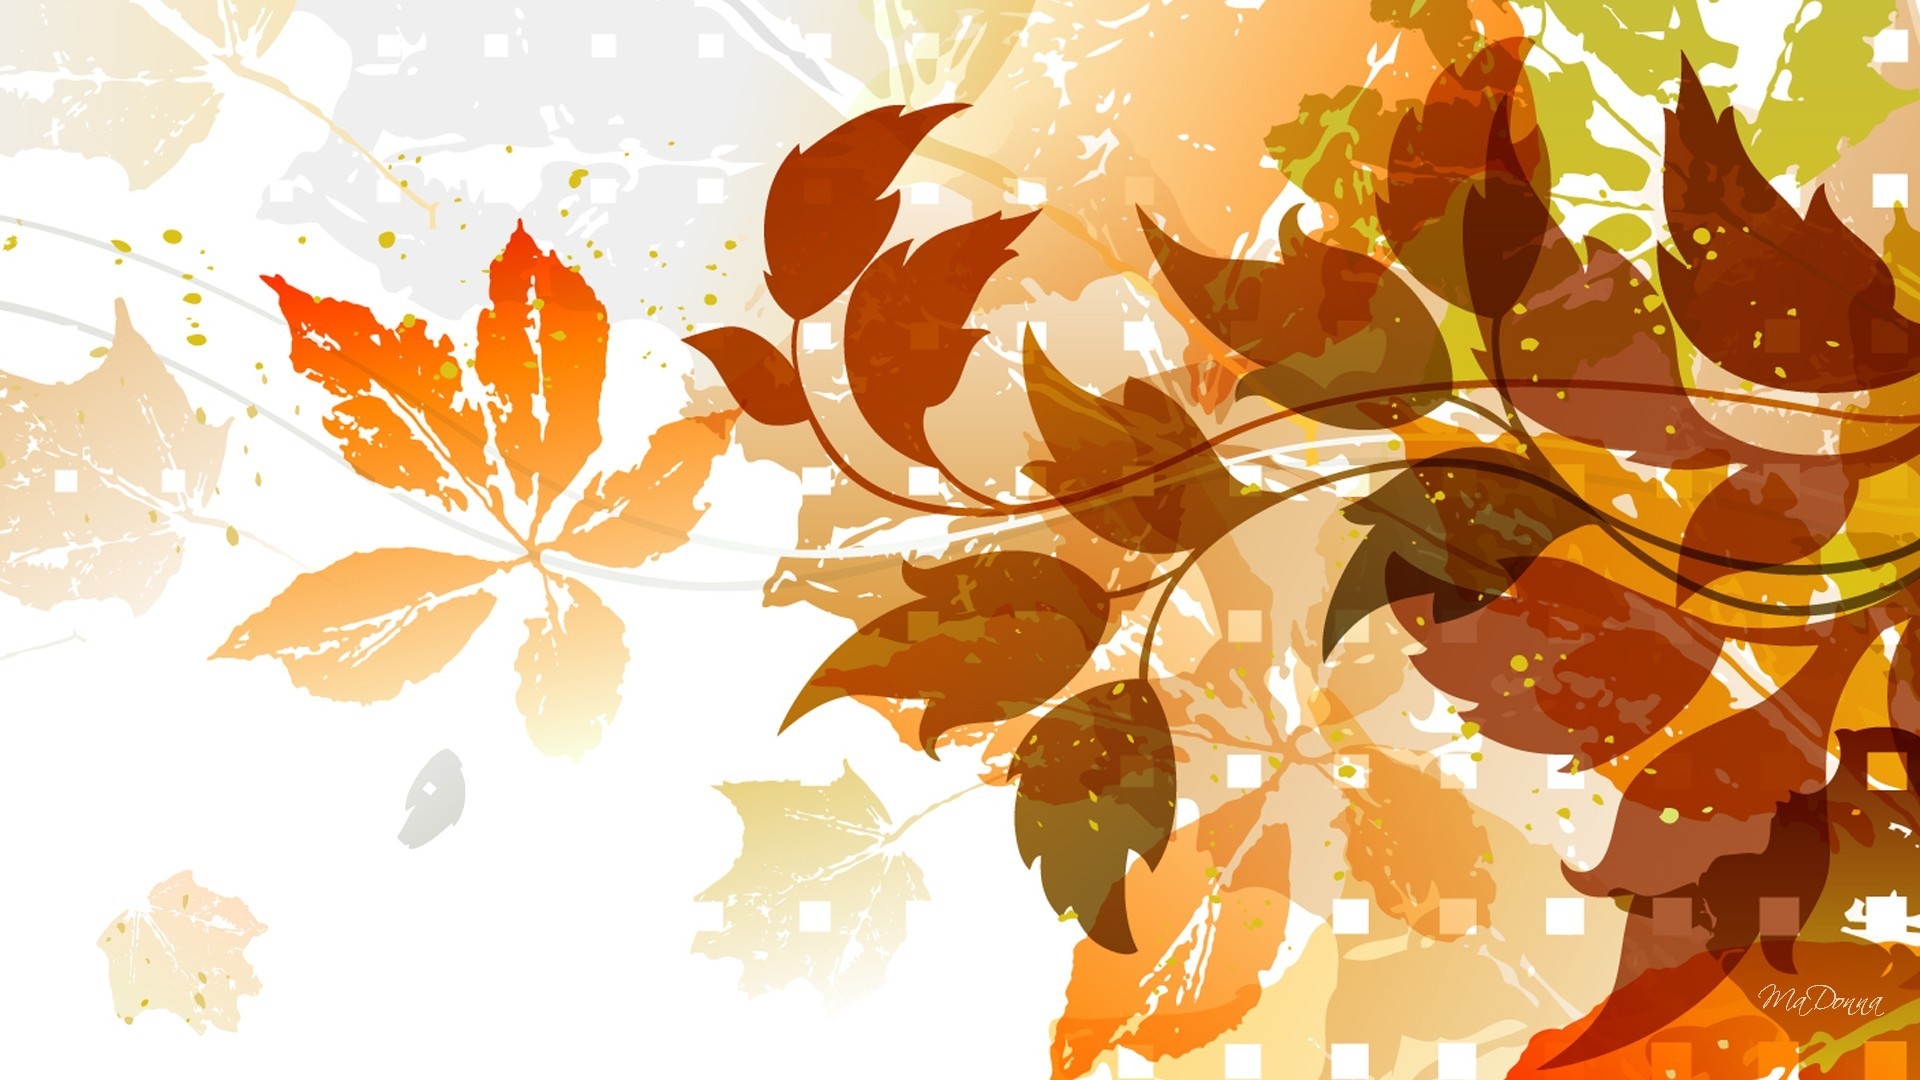 Wallpapers wallpaper autumn leaves vector design on the desktop